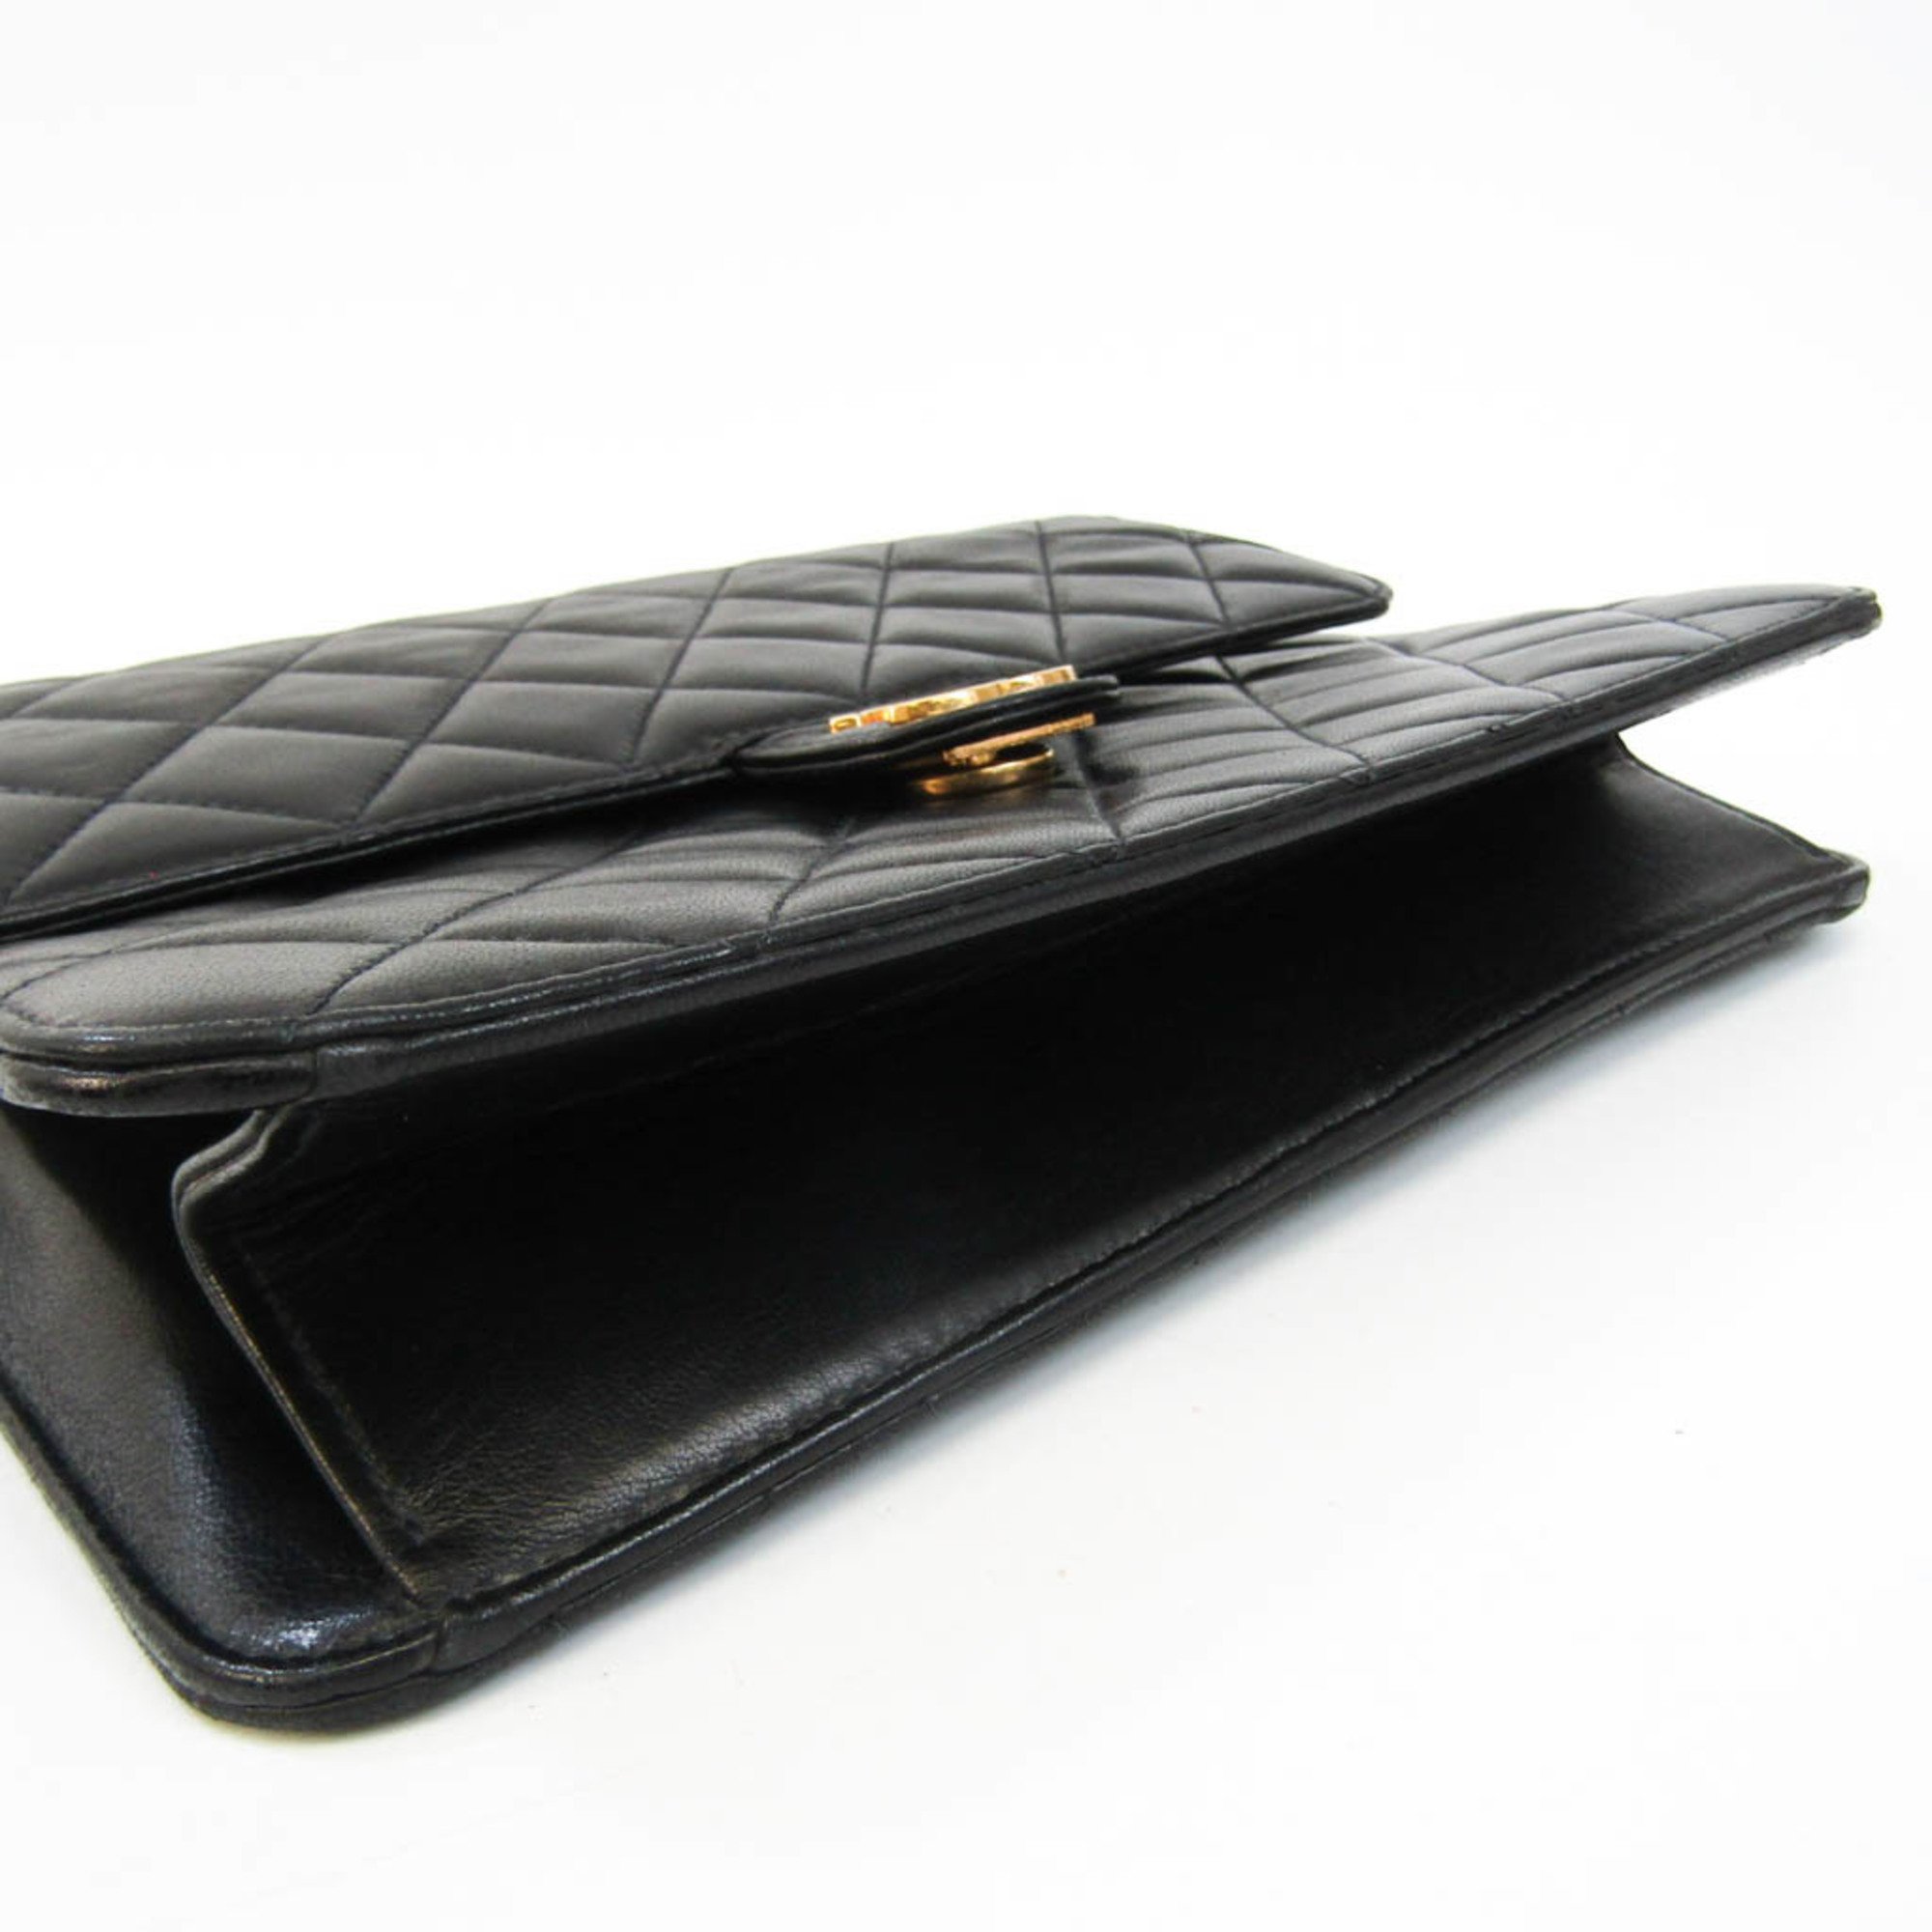 Chanel Matelasse A03569 Women's Leather Shoulder Bag